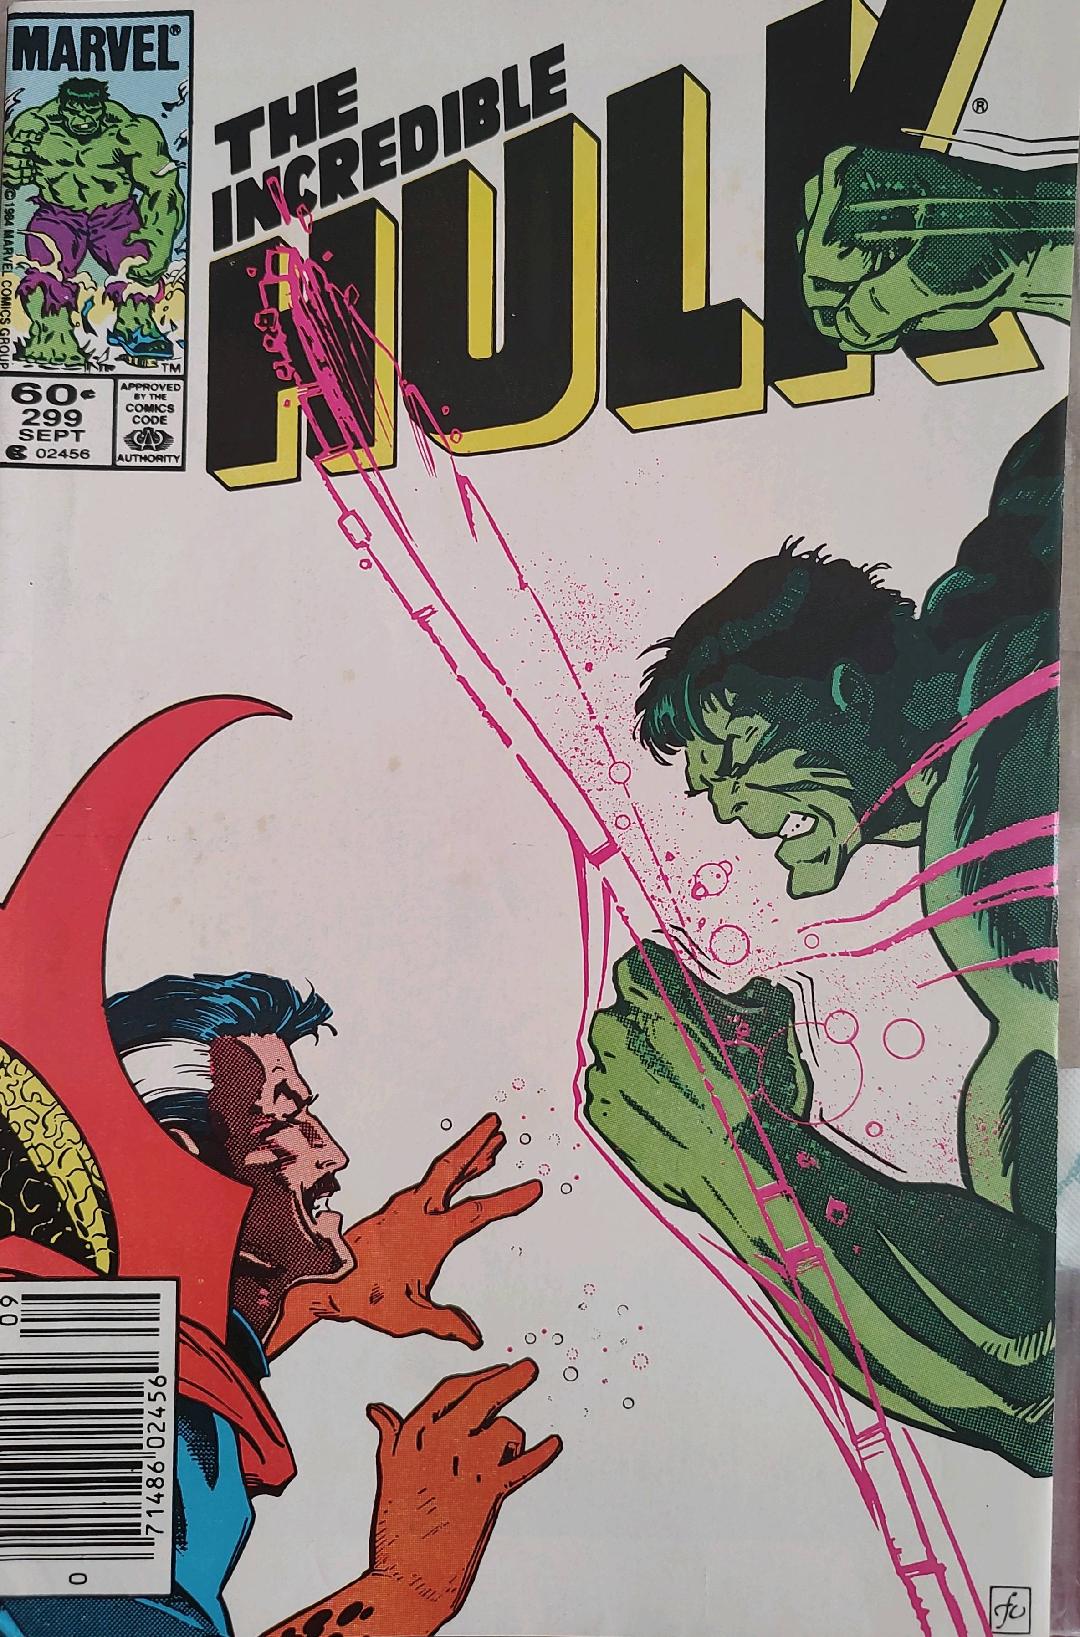 The Incredible Hulk #299 Comic Book Cover